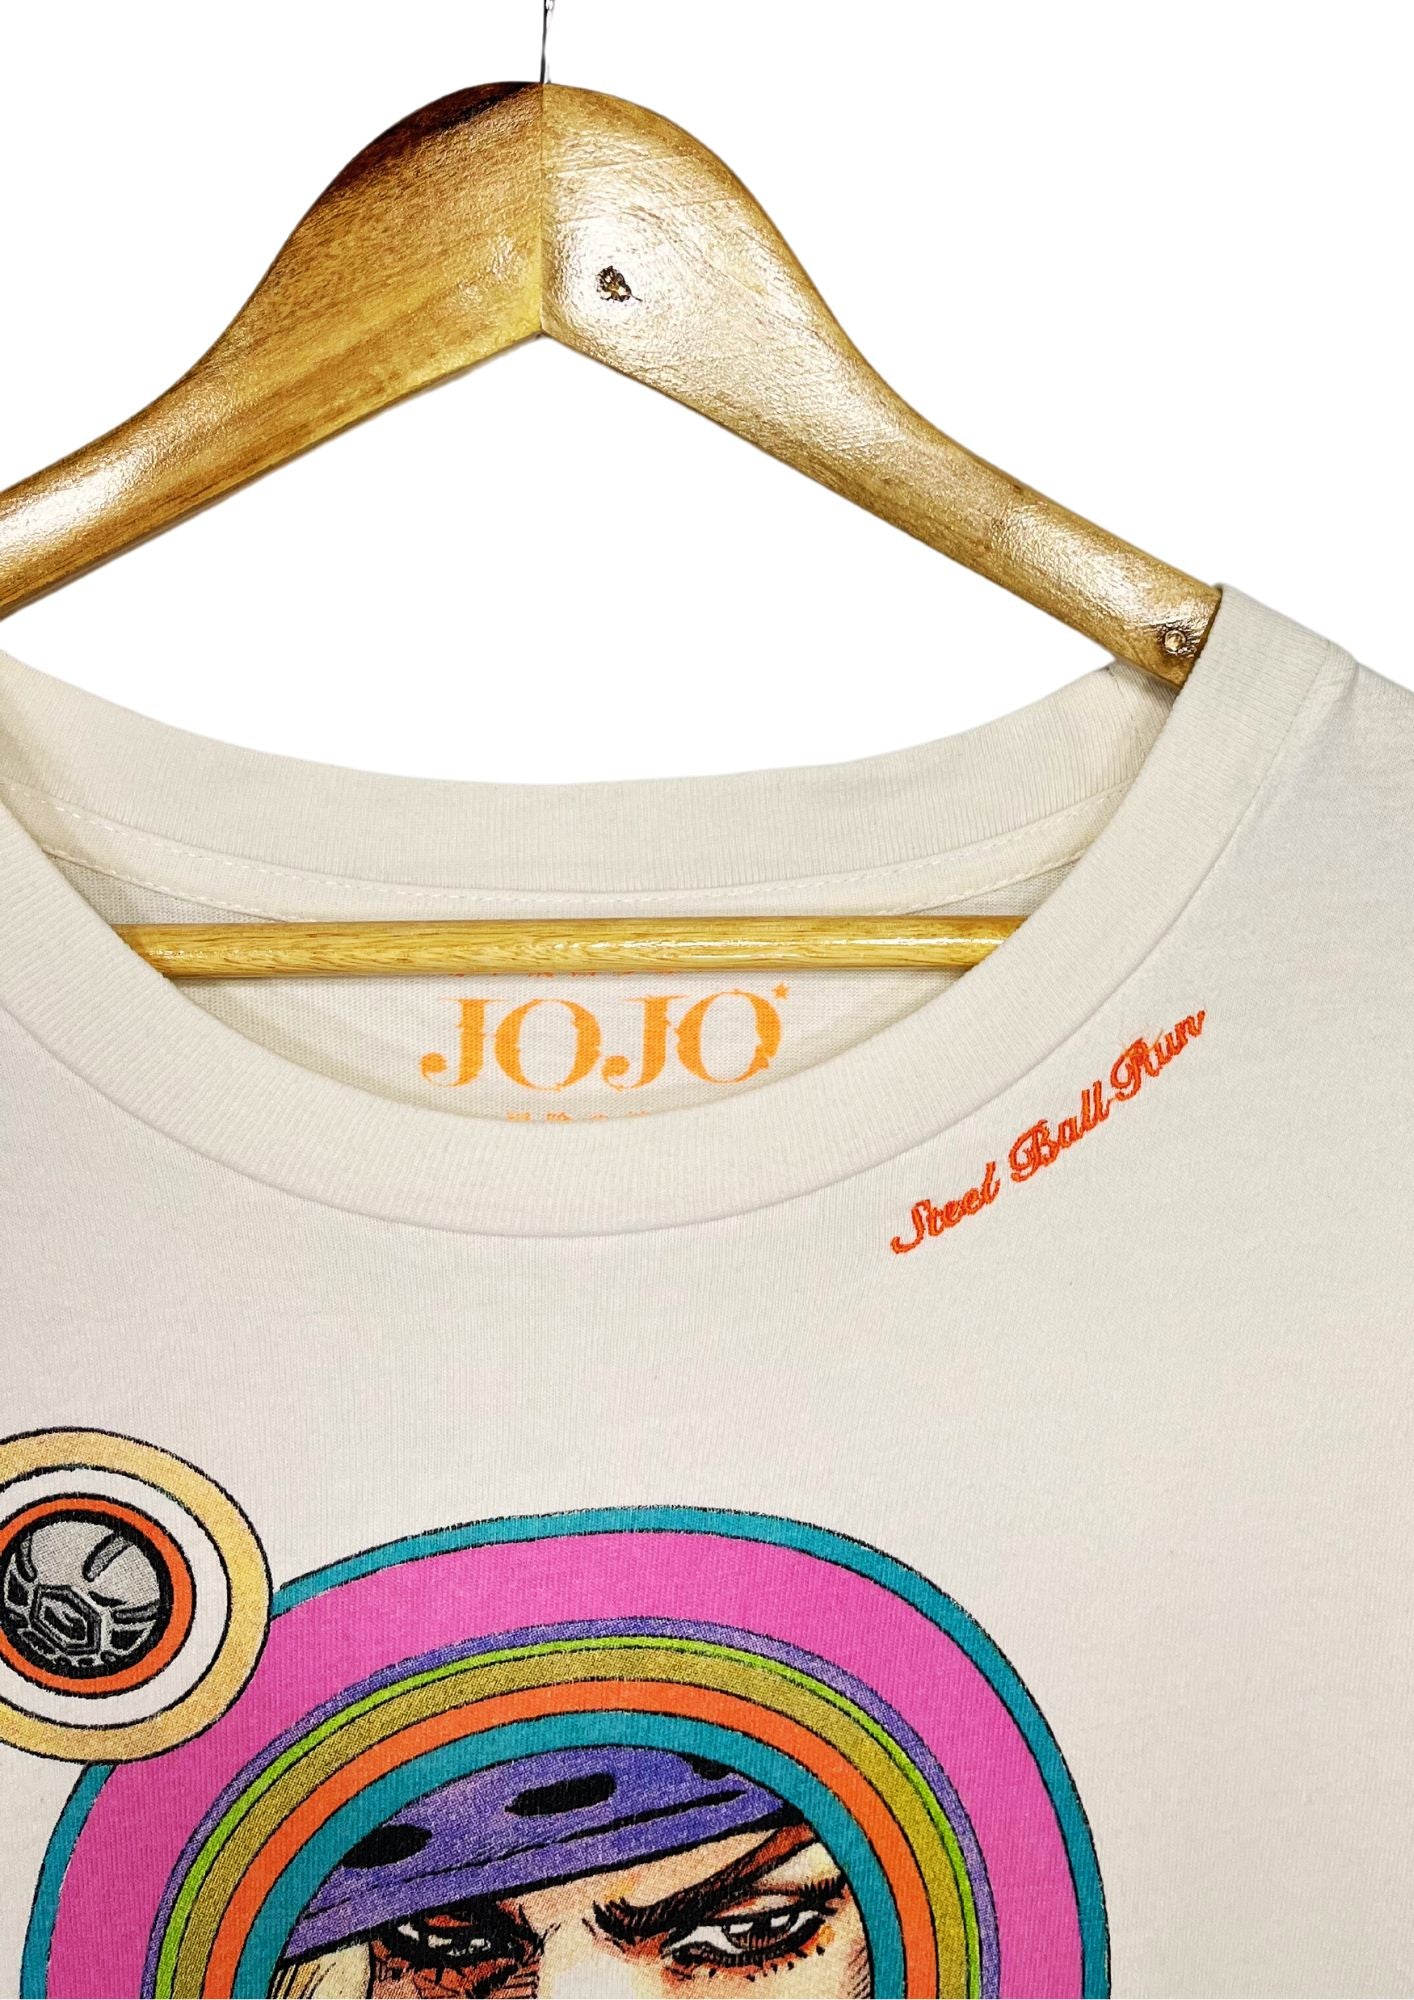 2012 Jojo's Bizarre Adventure Steel Ball Run x Hirohiko Araki Jojo Exhibition Gyro Zeppeli and Johnny Joestar T-shirt